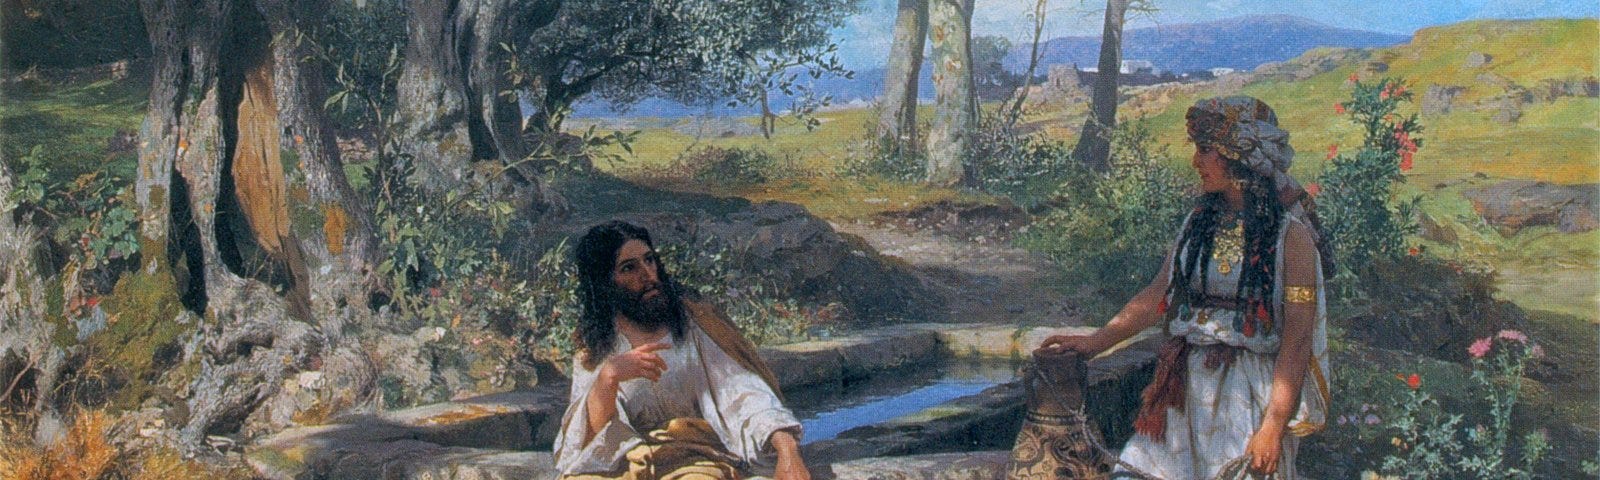 Jesus and the Samaritan woman near the well of Jacob